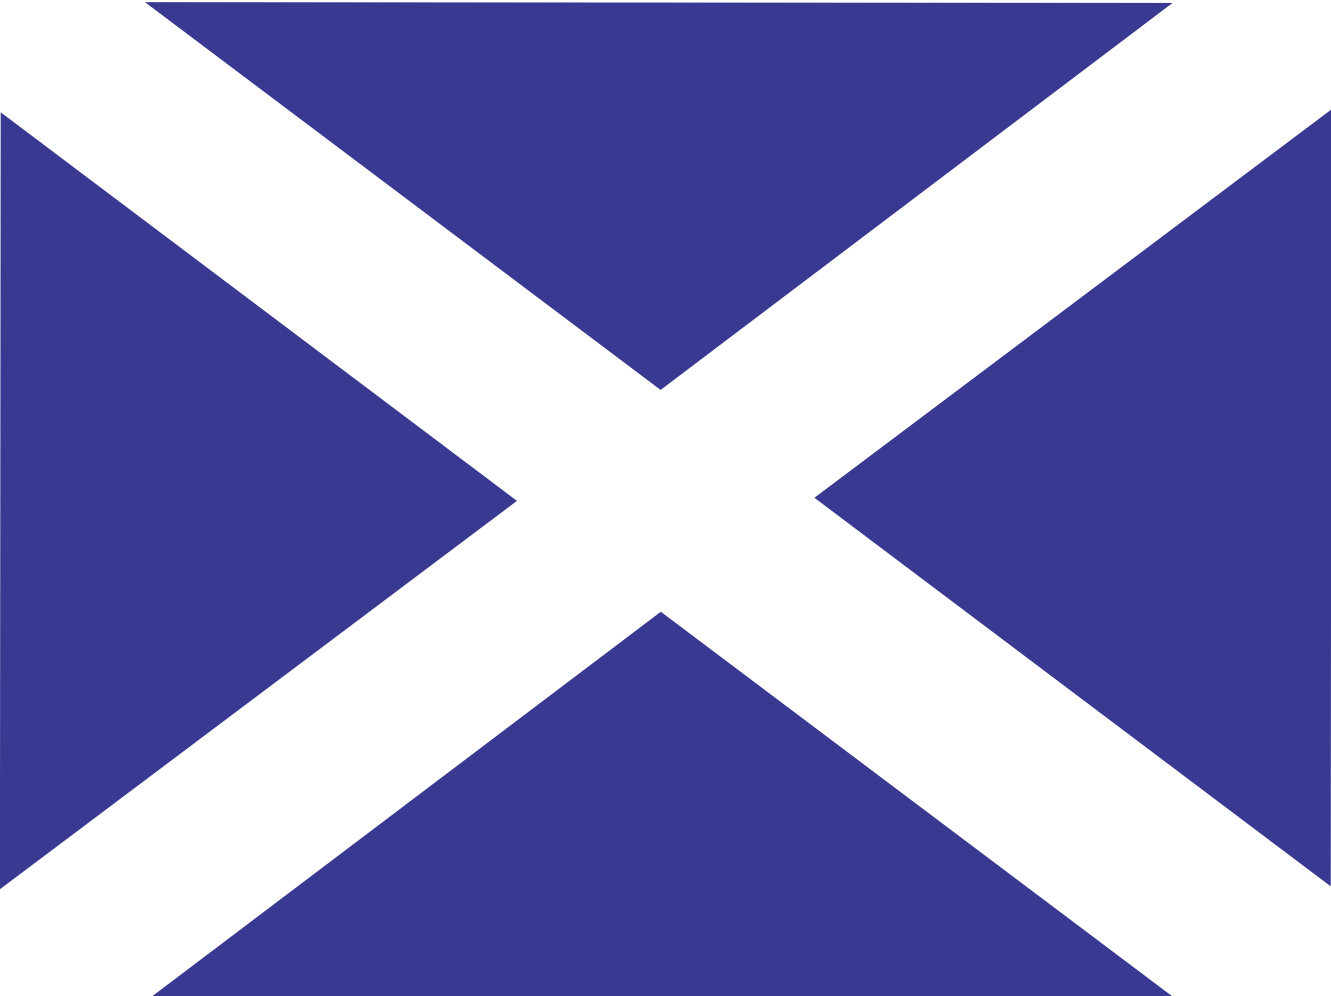 BasketsGalore's 5 Main Scottish Connections